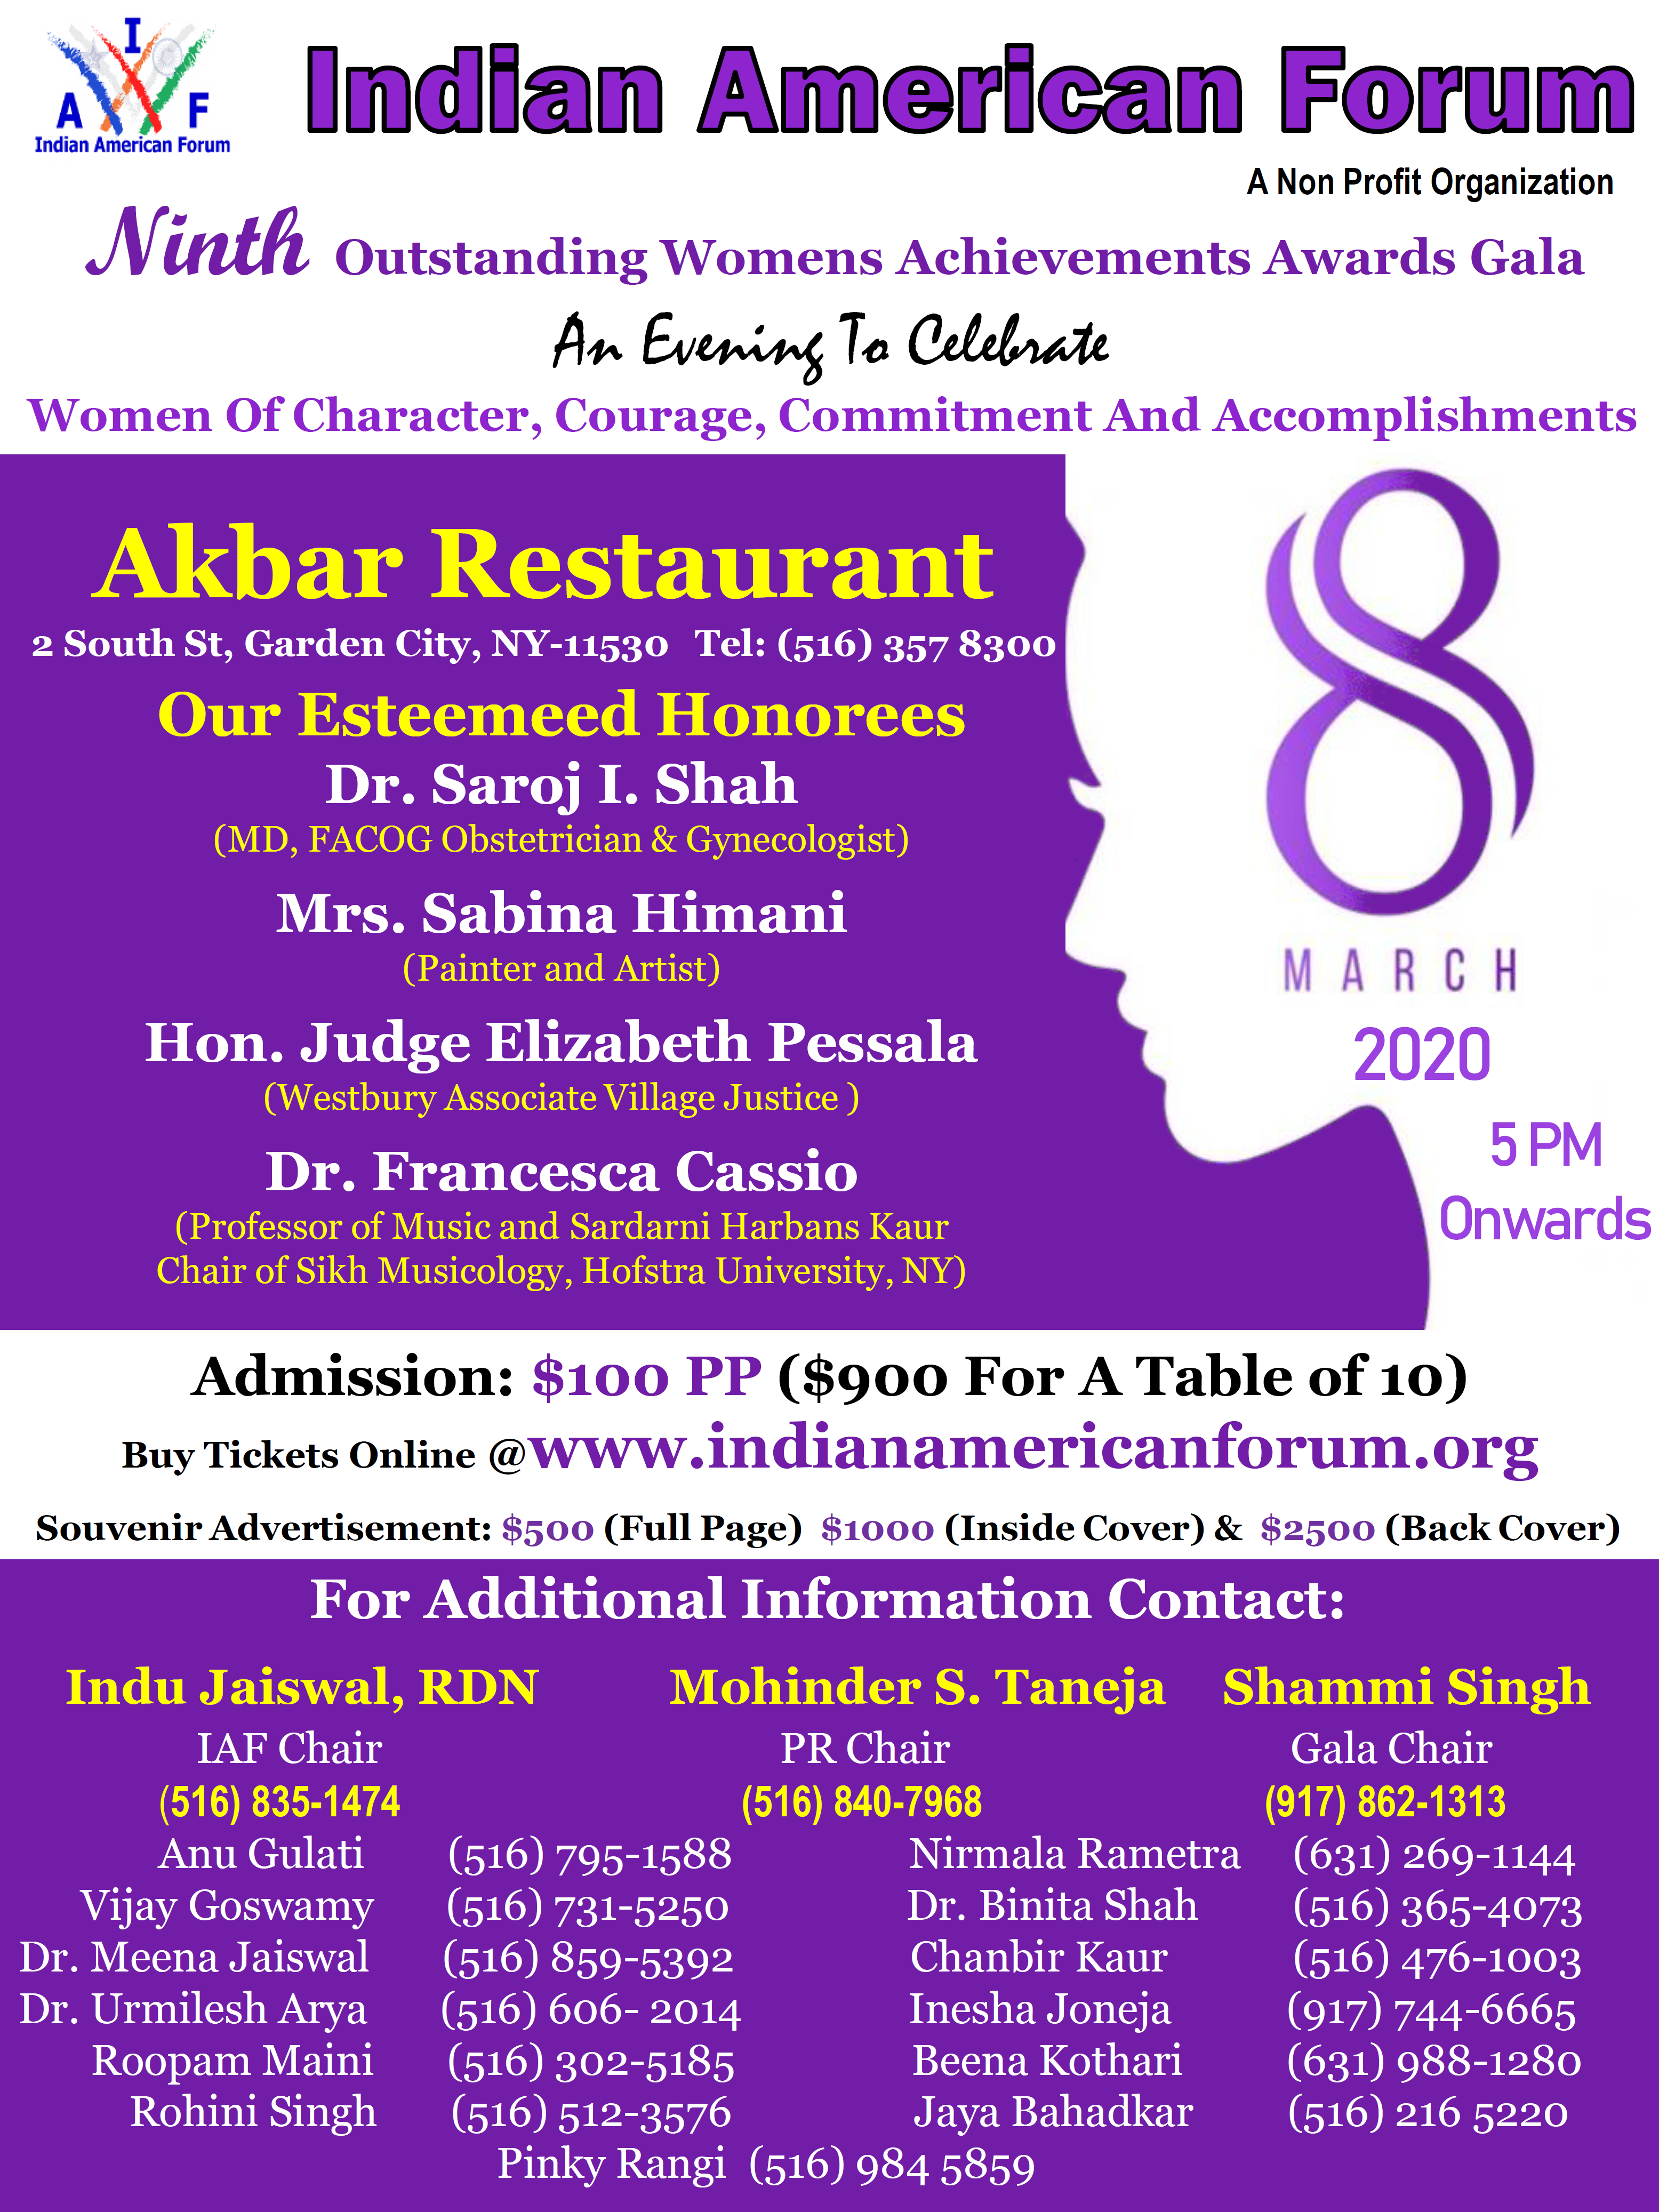 IAF 9th Annual Women's Achievement Awards Gala @ Akbar Restaurant | Garden City | New York | United States